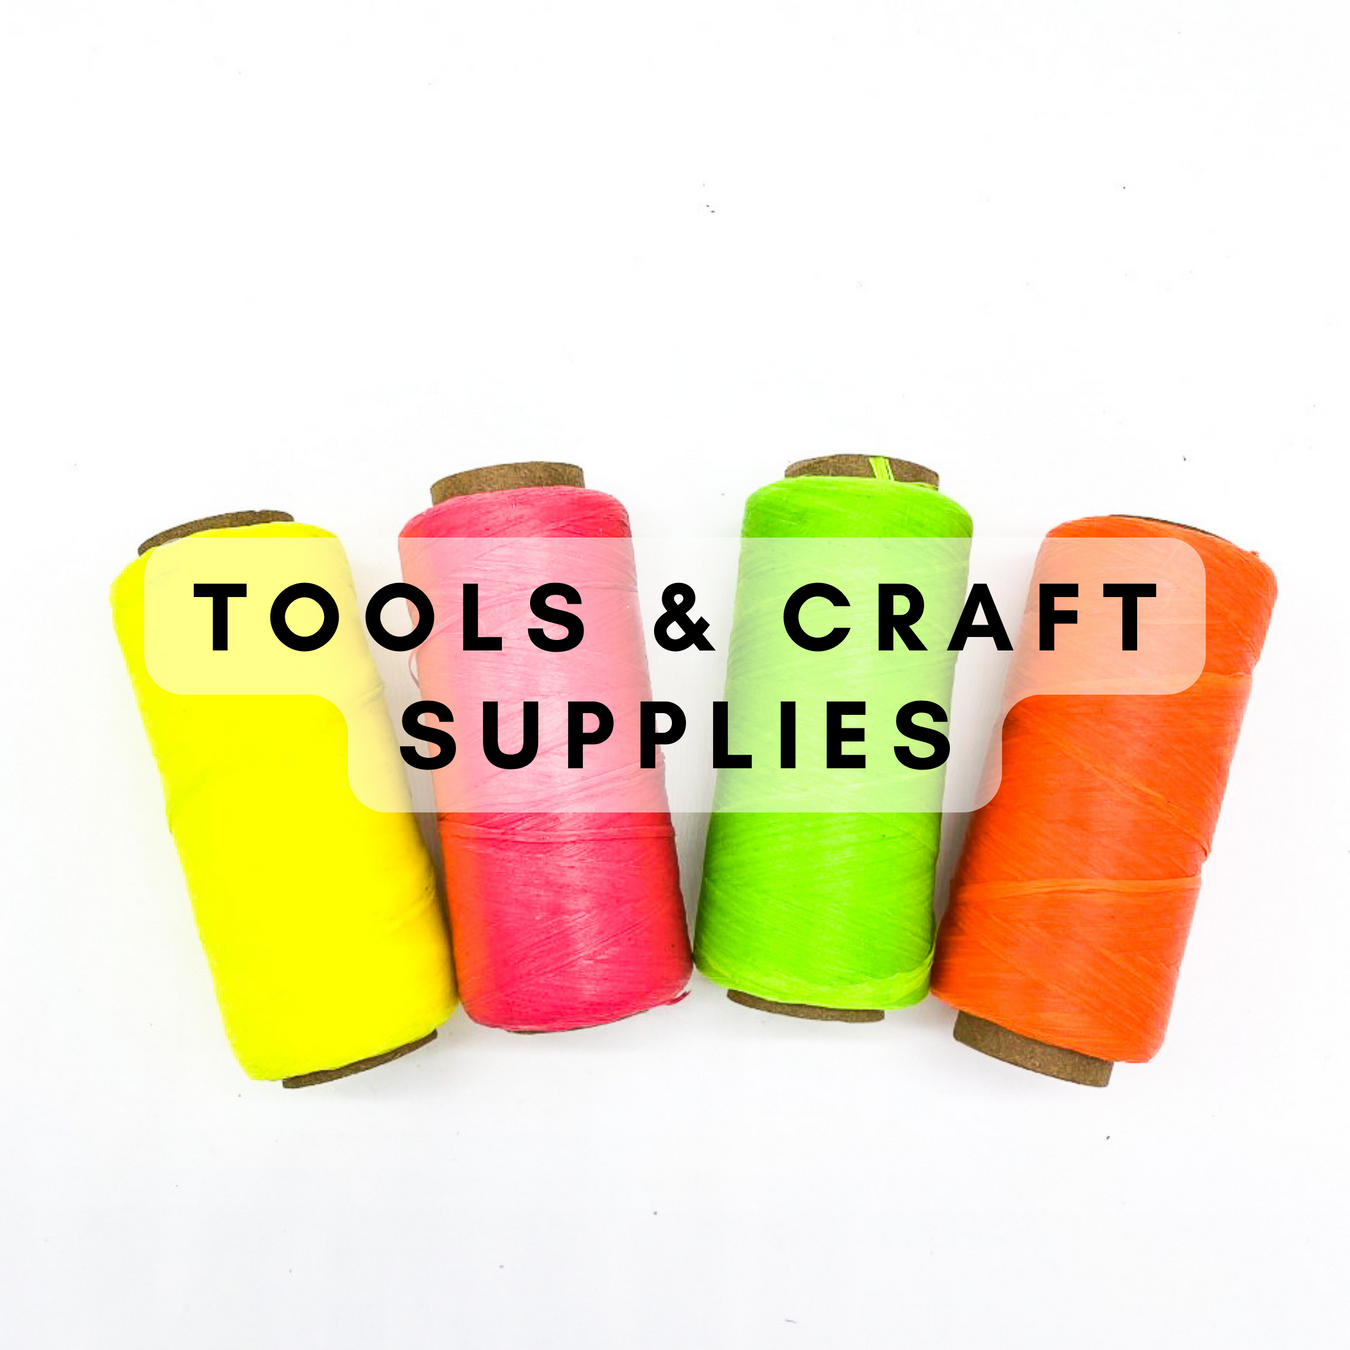 Tools & Craft Supplies